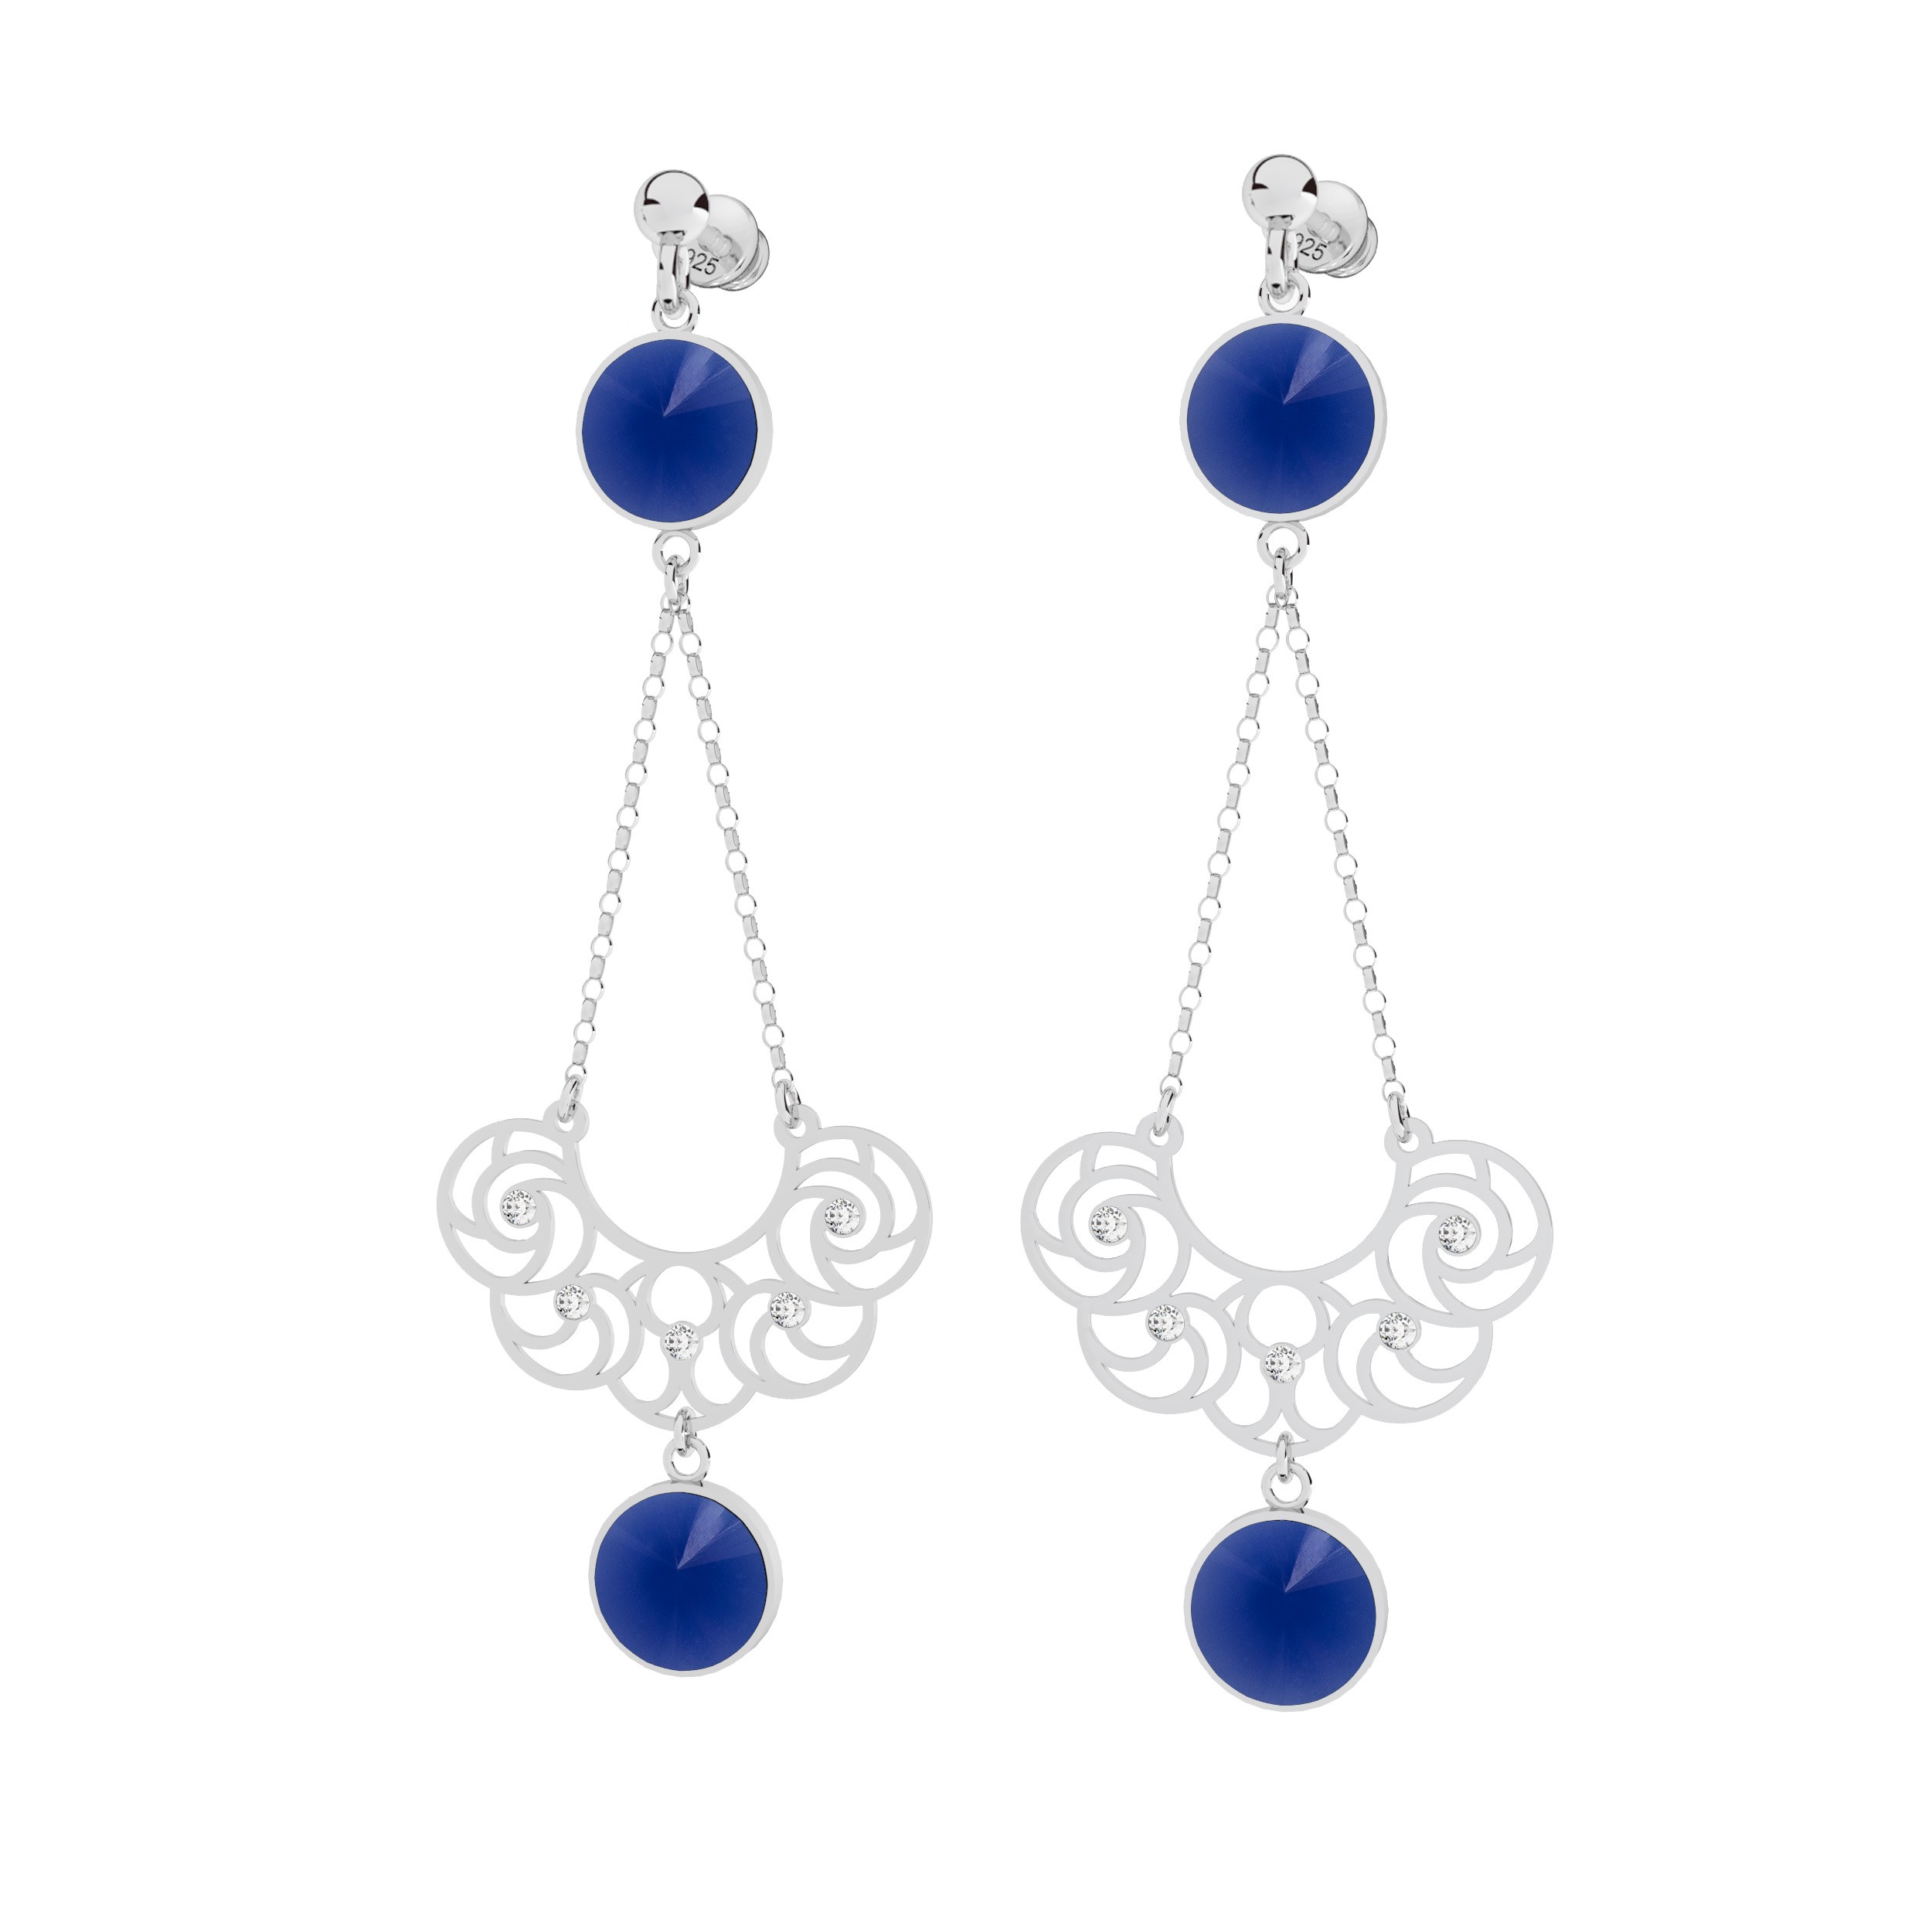 Baroque earrings - Brillare, Sky&Co, sterling silver 925